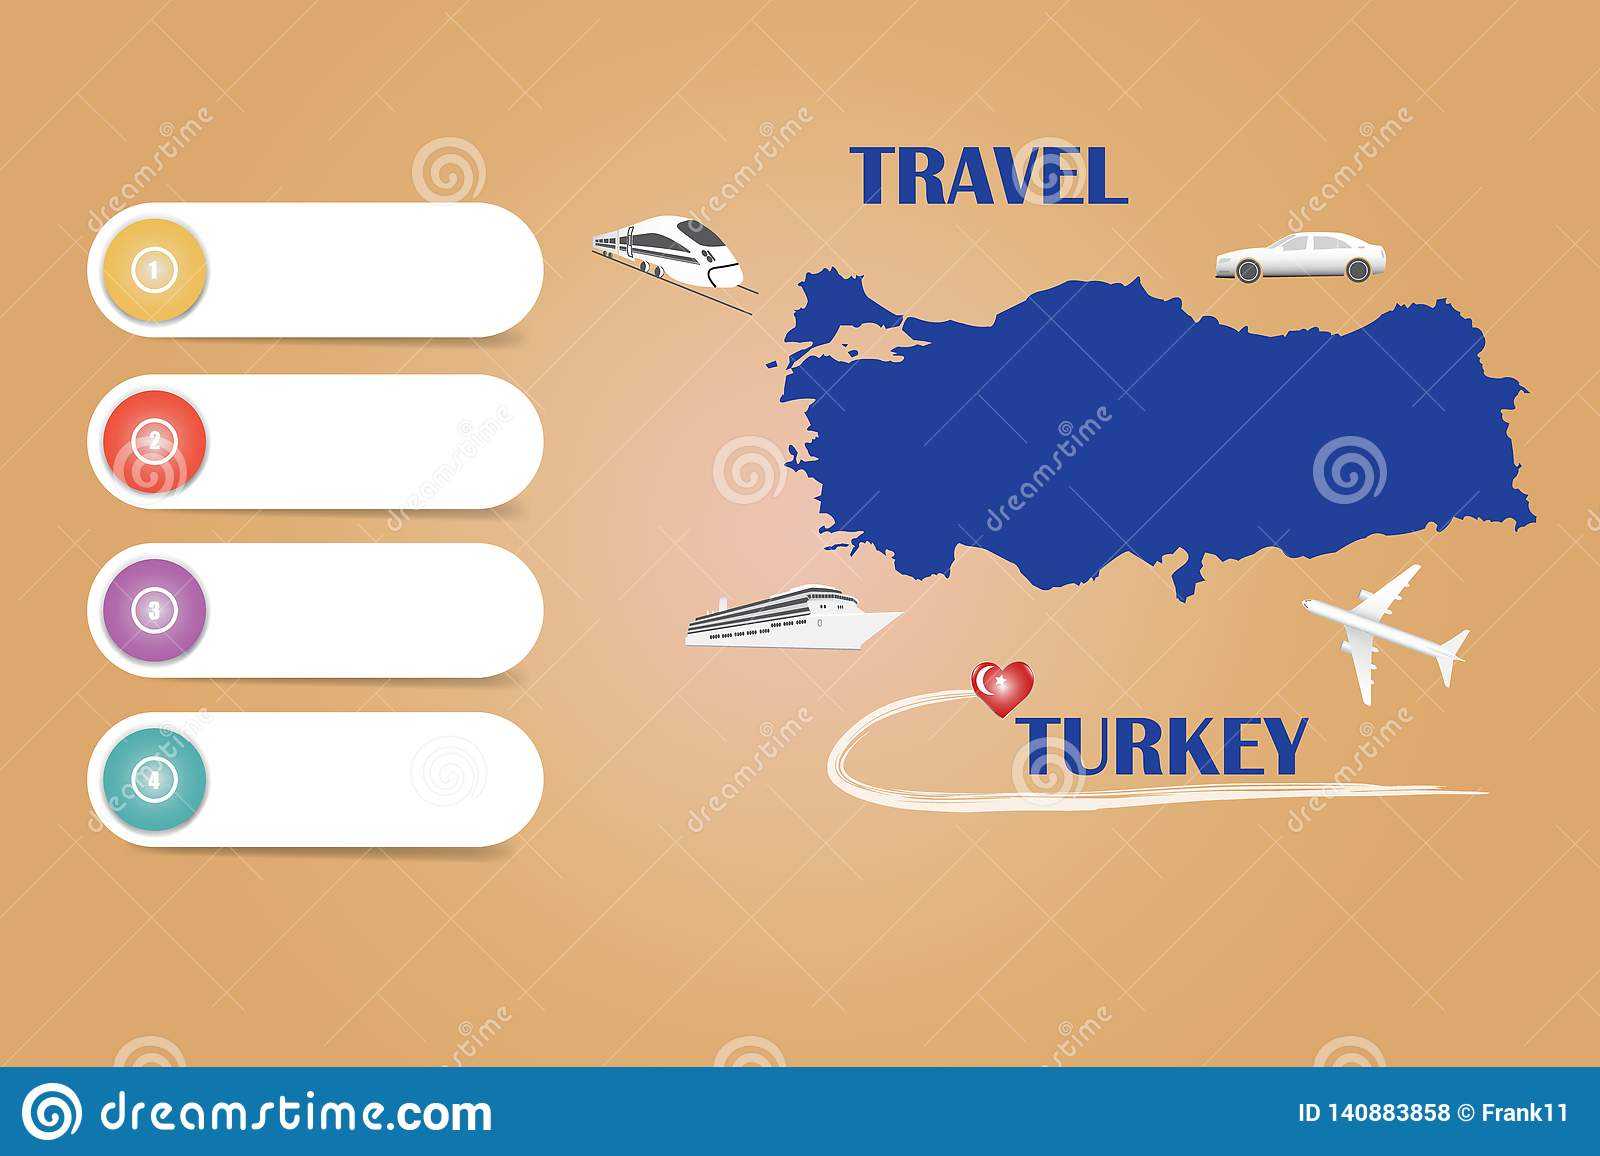 Travel Turkey Template Vector Stock Vector – Illustration Of Pertaining To Blank Turkey Template